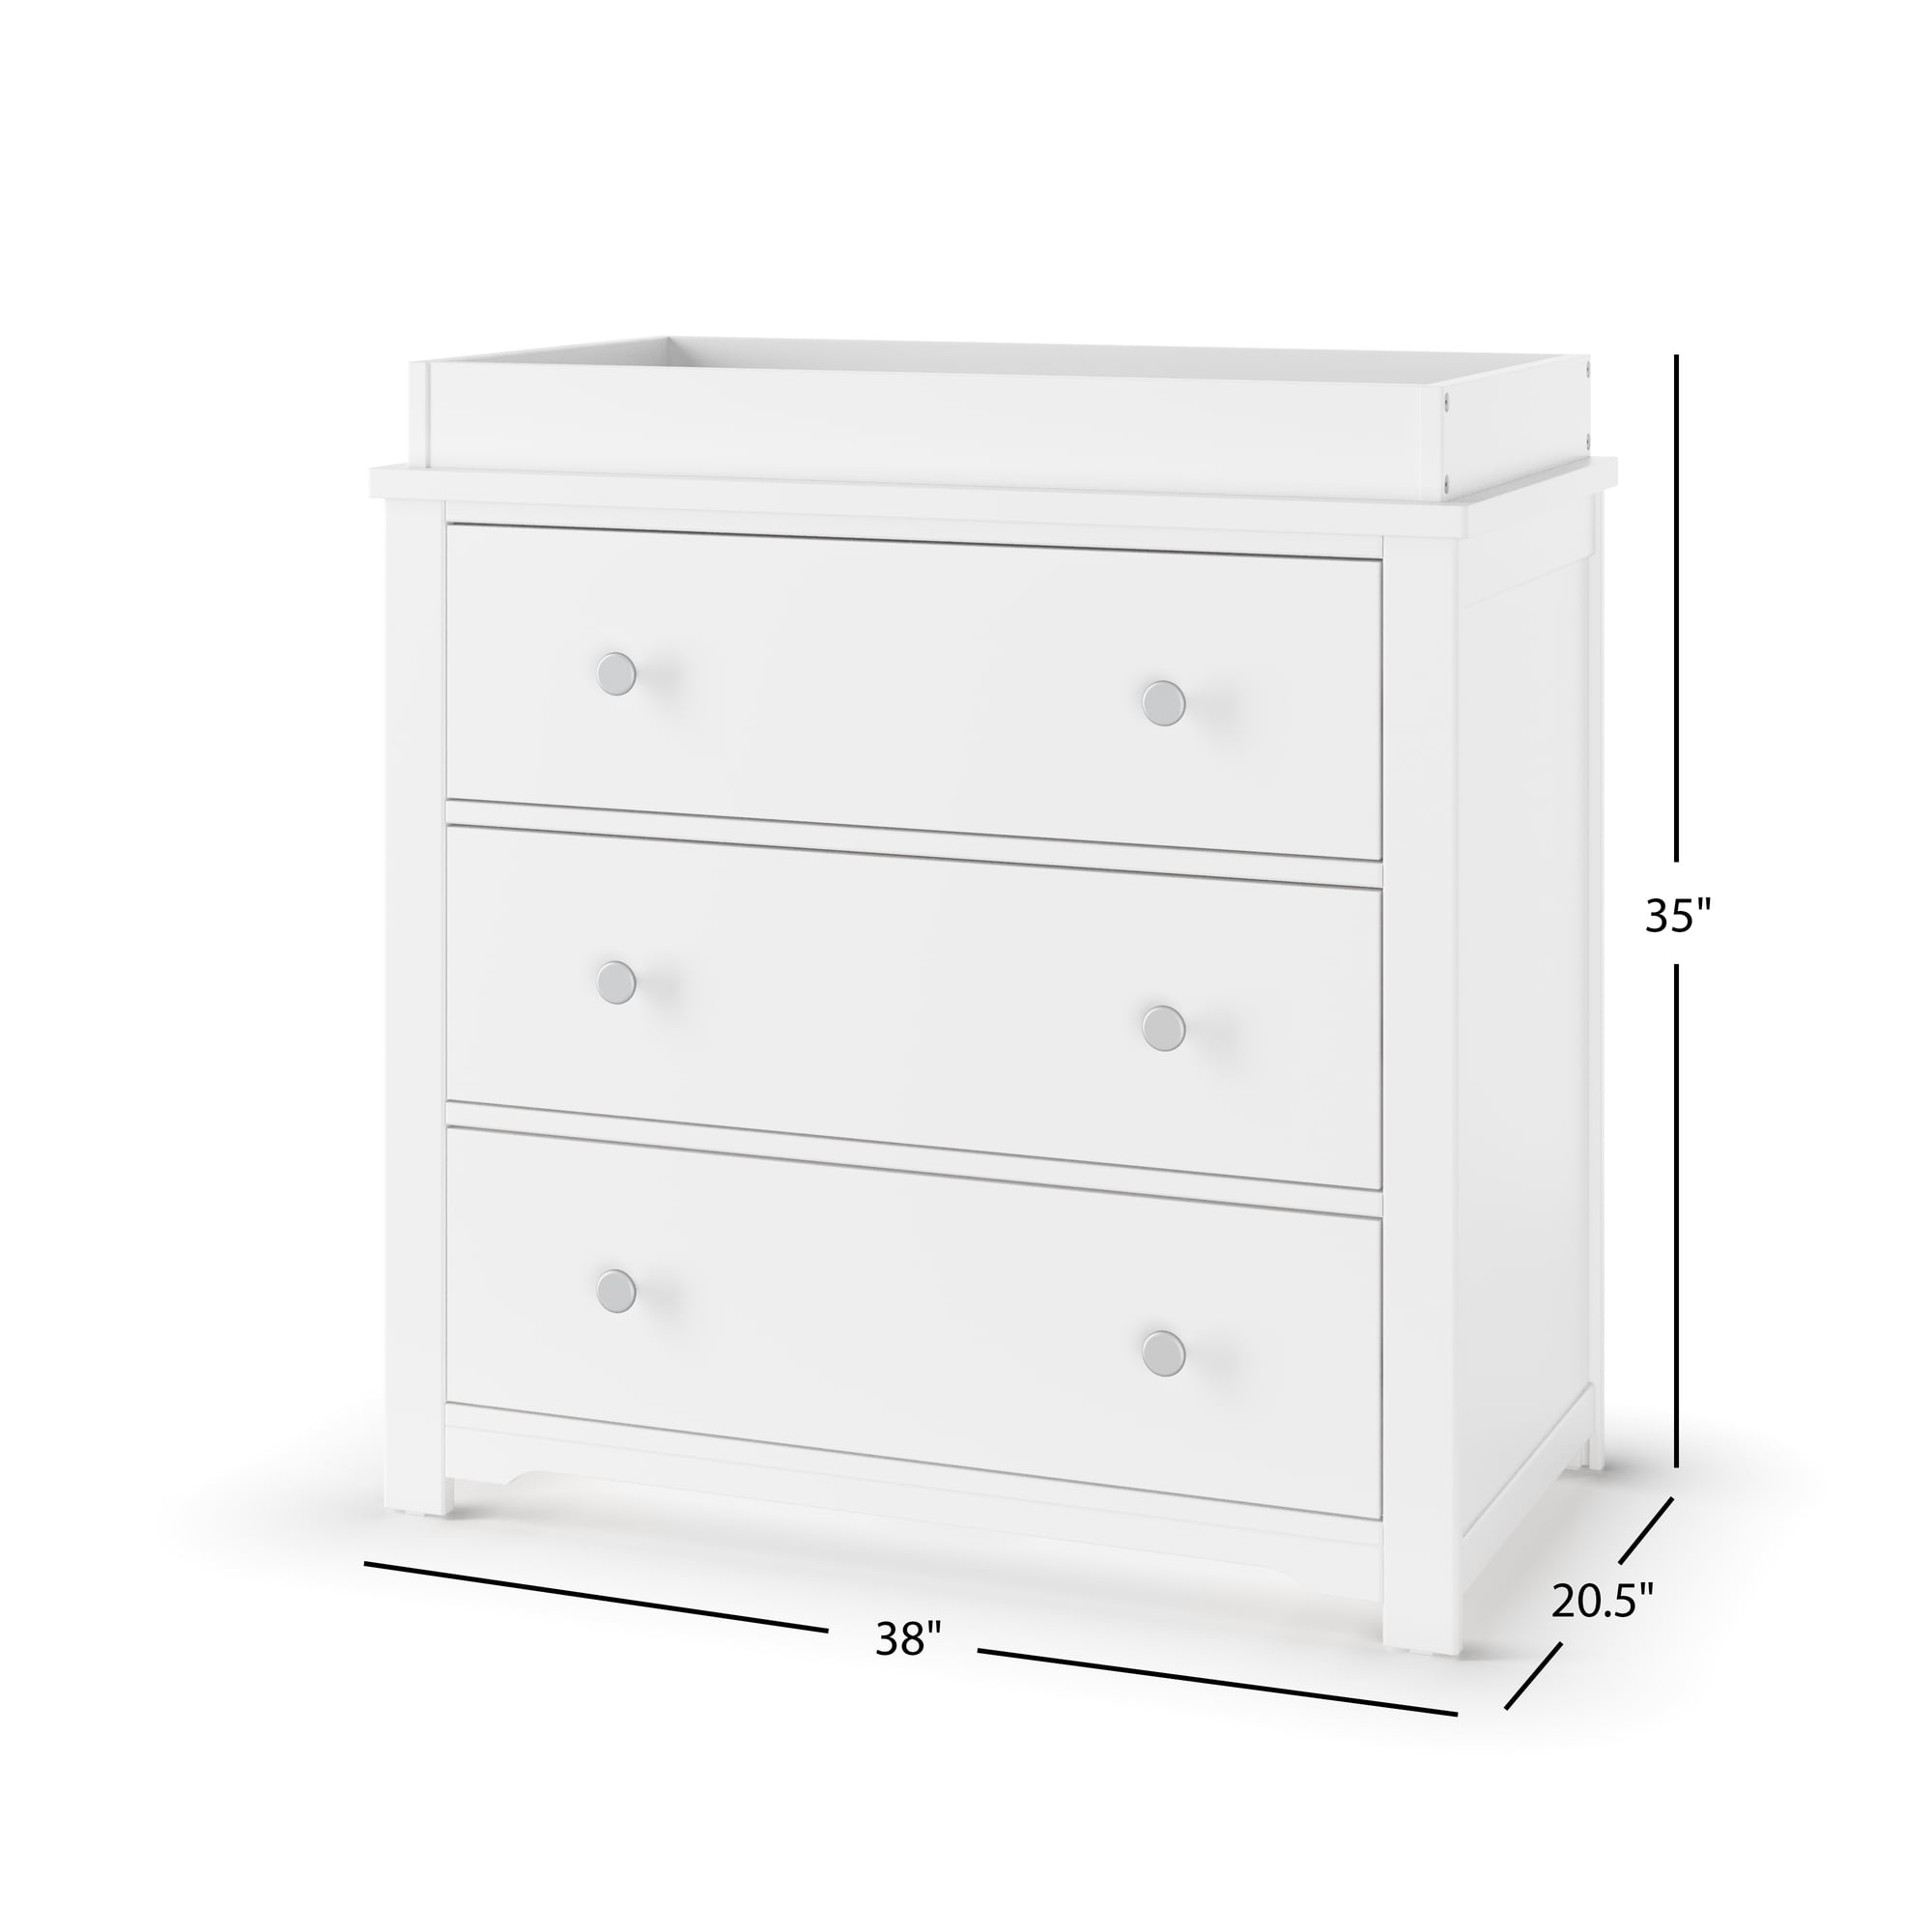 JEC Distributors » E4N Combination Dresser/Changer